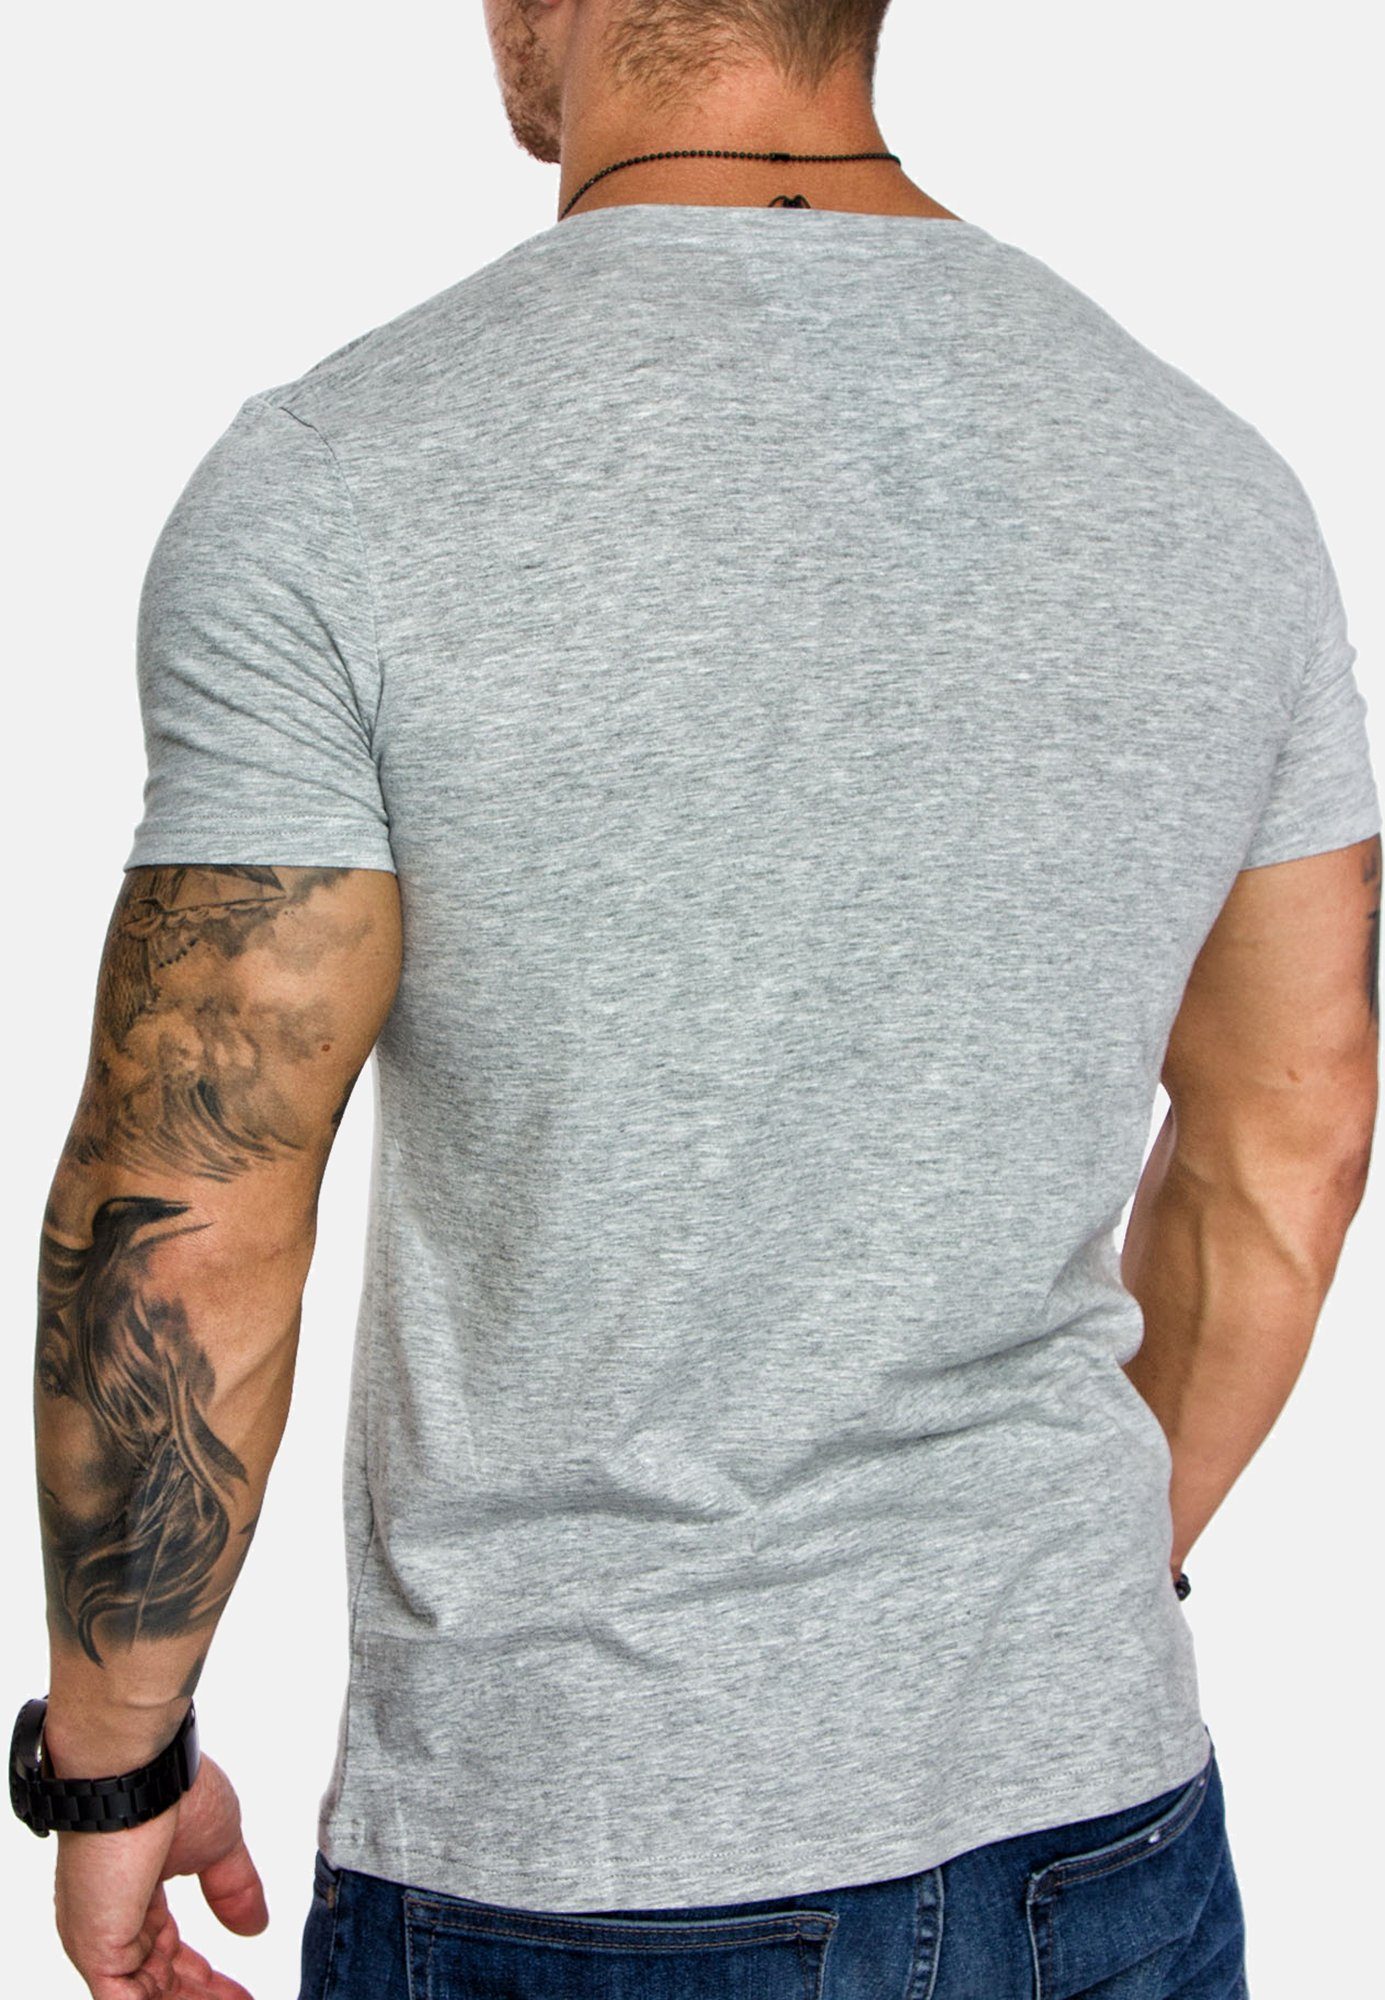 Amaci&Sons Grau T-Shirt Einfarbig T-Shirt Melange V-Ausschnitt mit Shirt V-Ausschnitt V-Neck Vintage Herren EUGENE Basic Basic